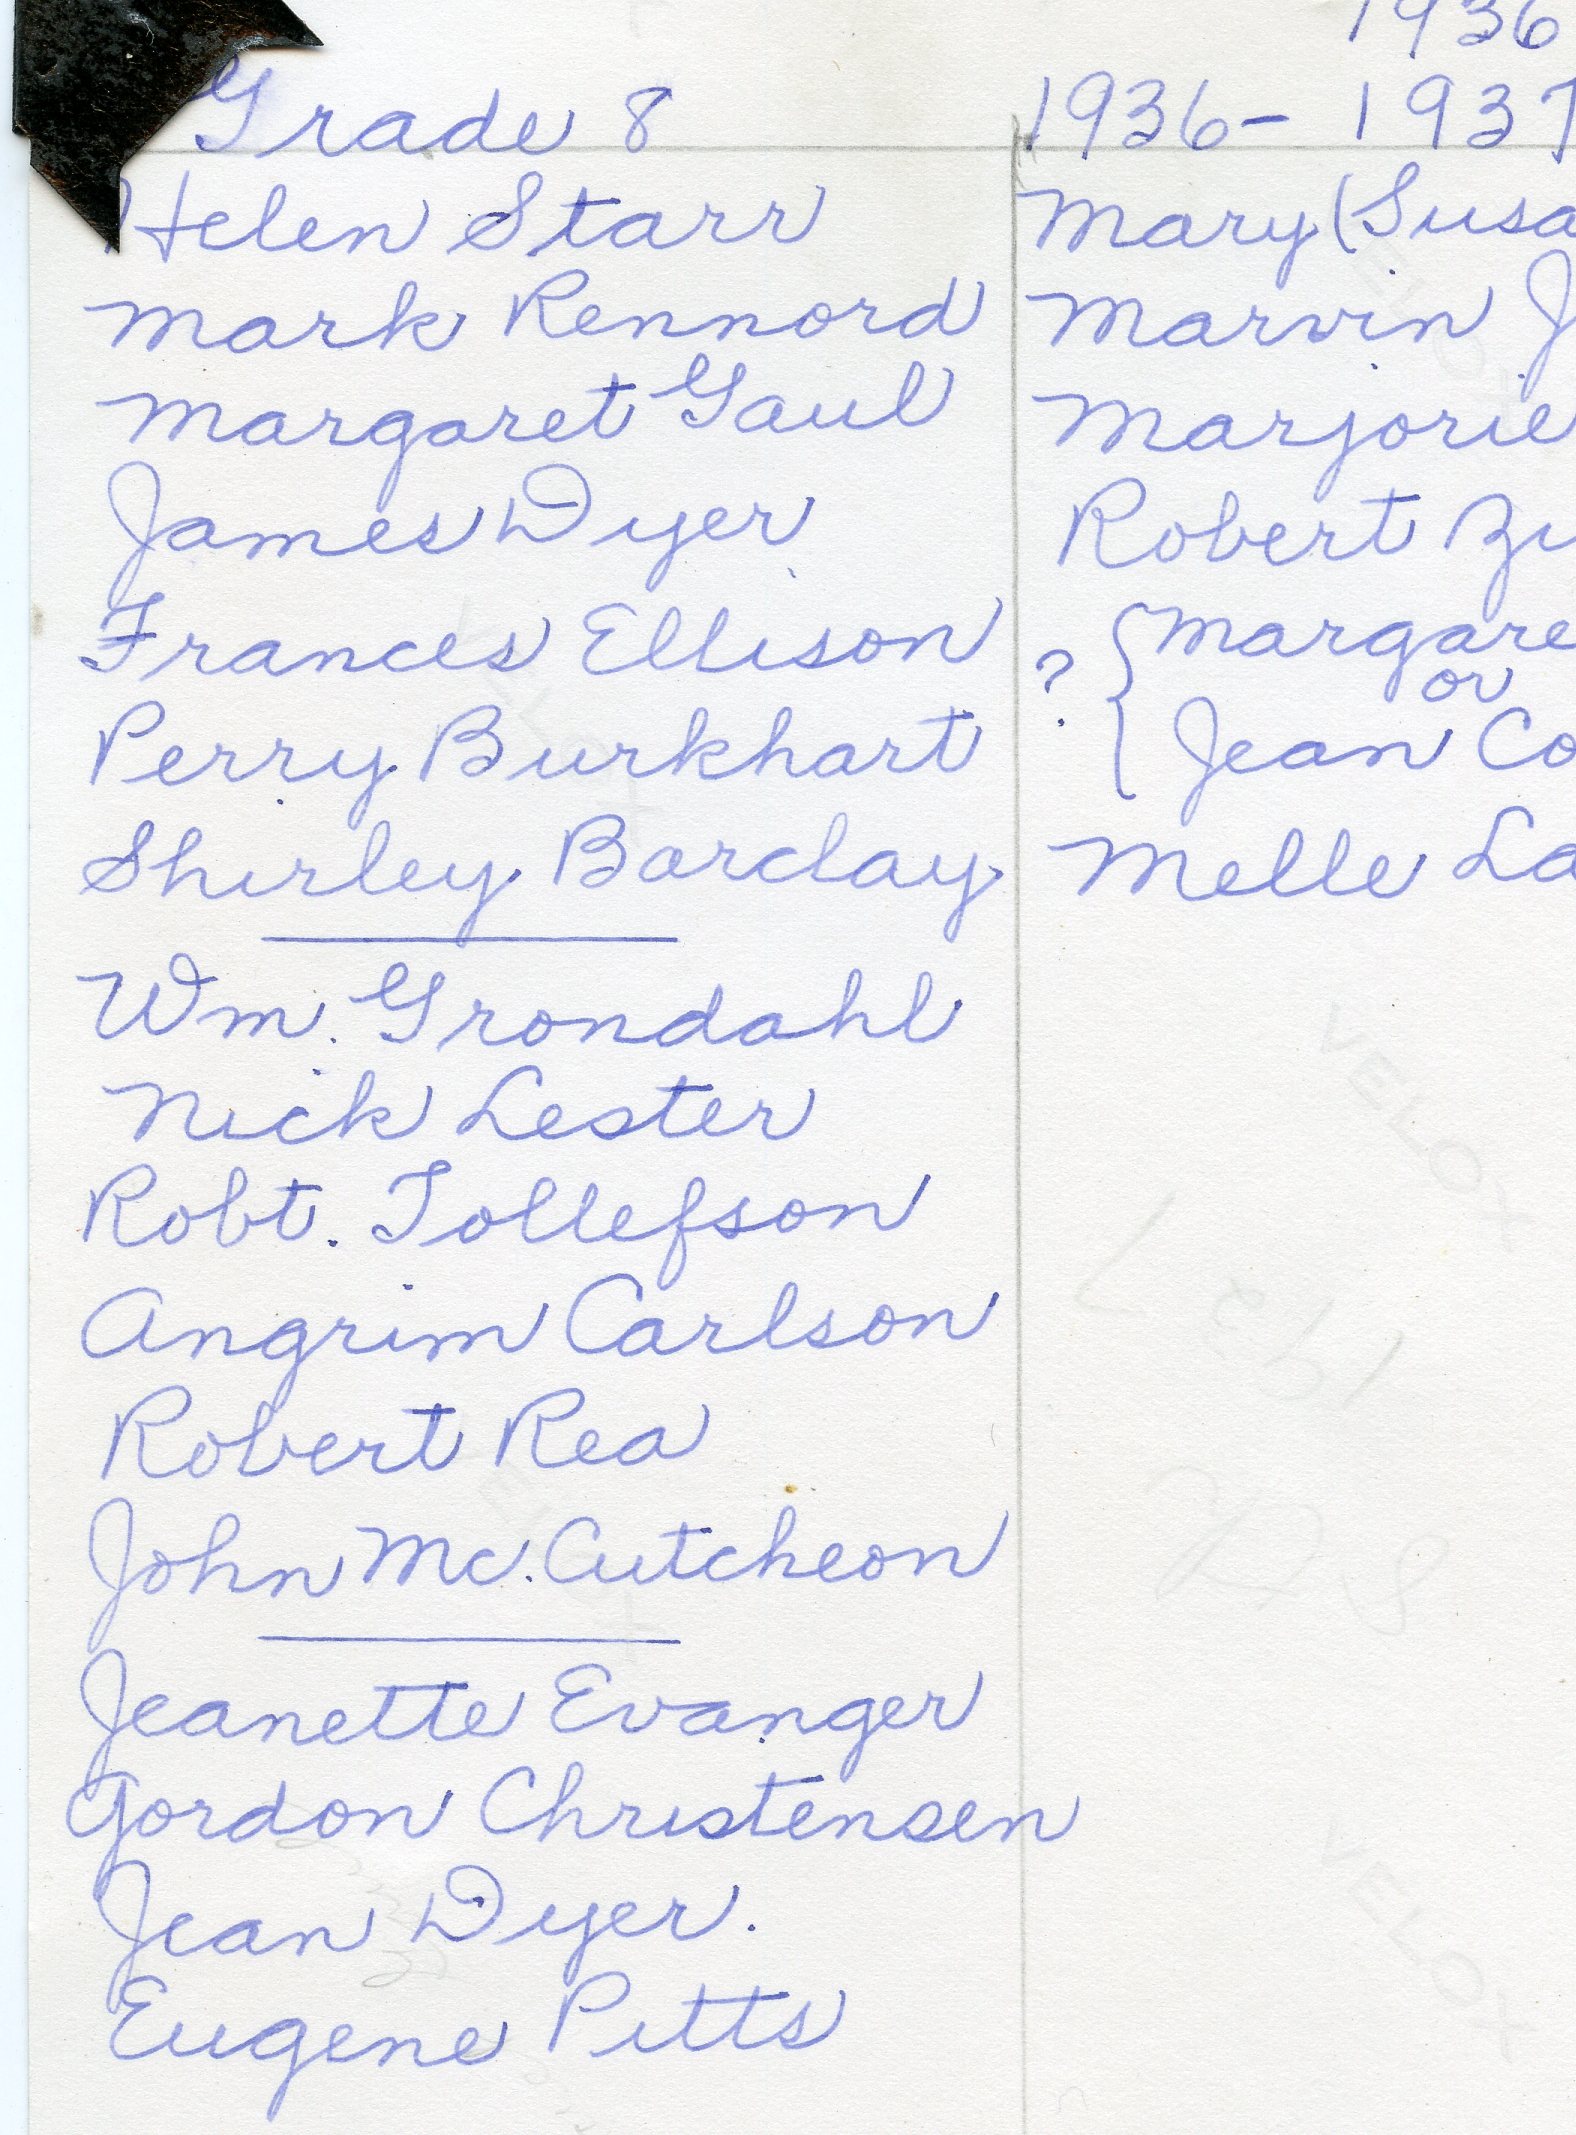 1937 8th names